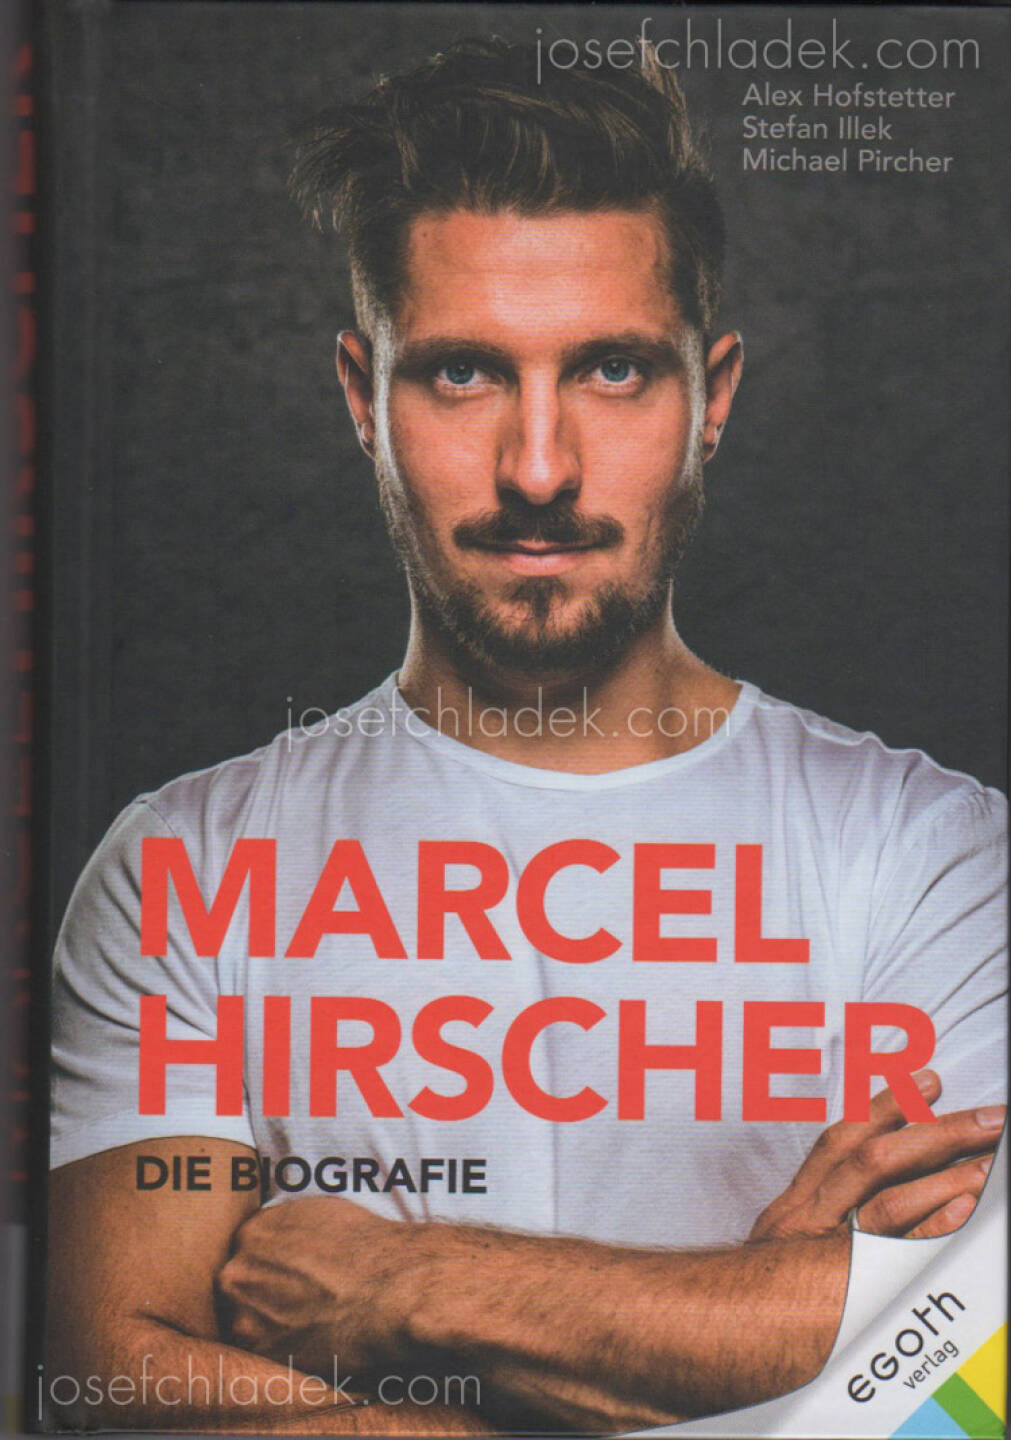 Marcel Hirscher - Die Biografie - https://runplugged.com/runbooks/show/alex_hofstetter_stefan_illek_und_michael_pircher_-_marcel_hirscher_die_biografie